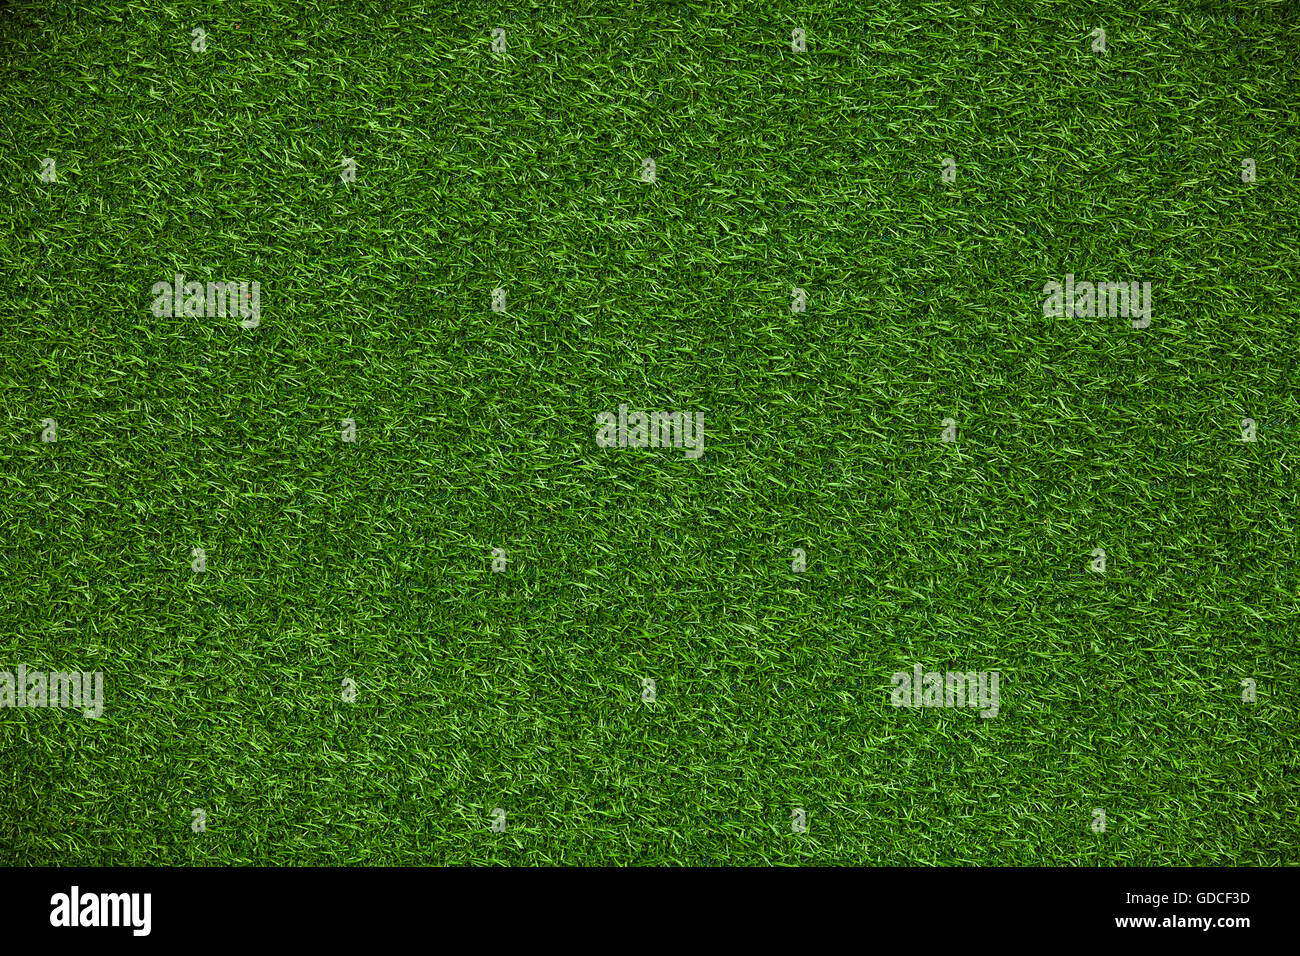 Green grass lawn Stock Photo